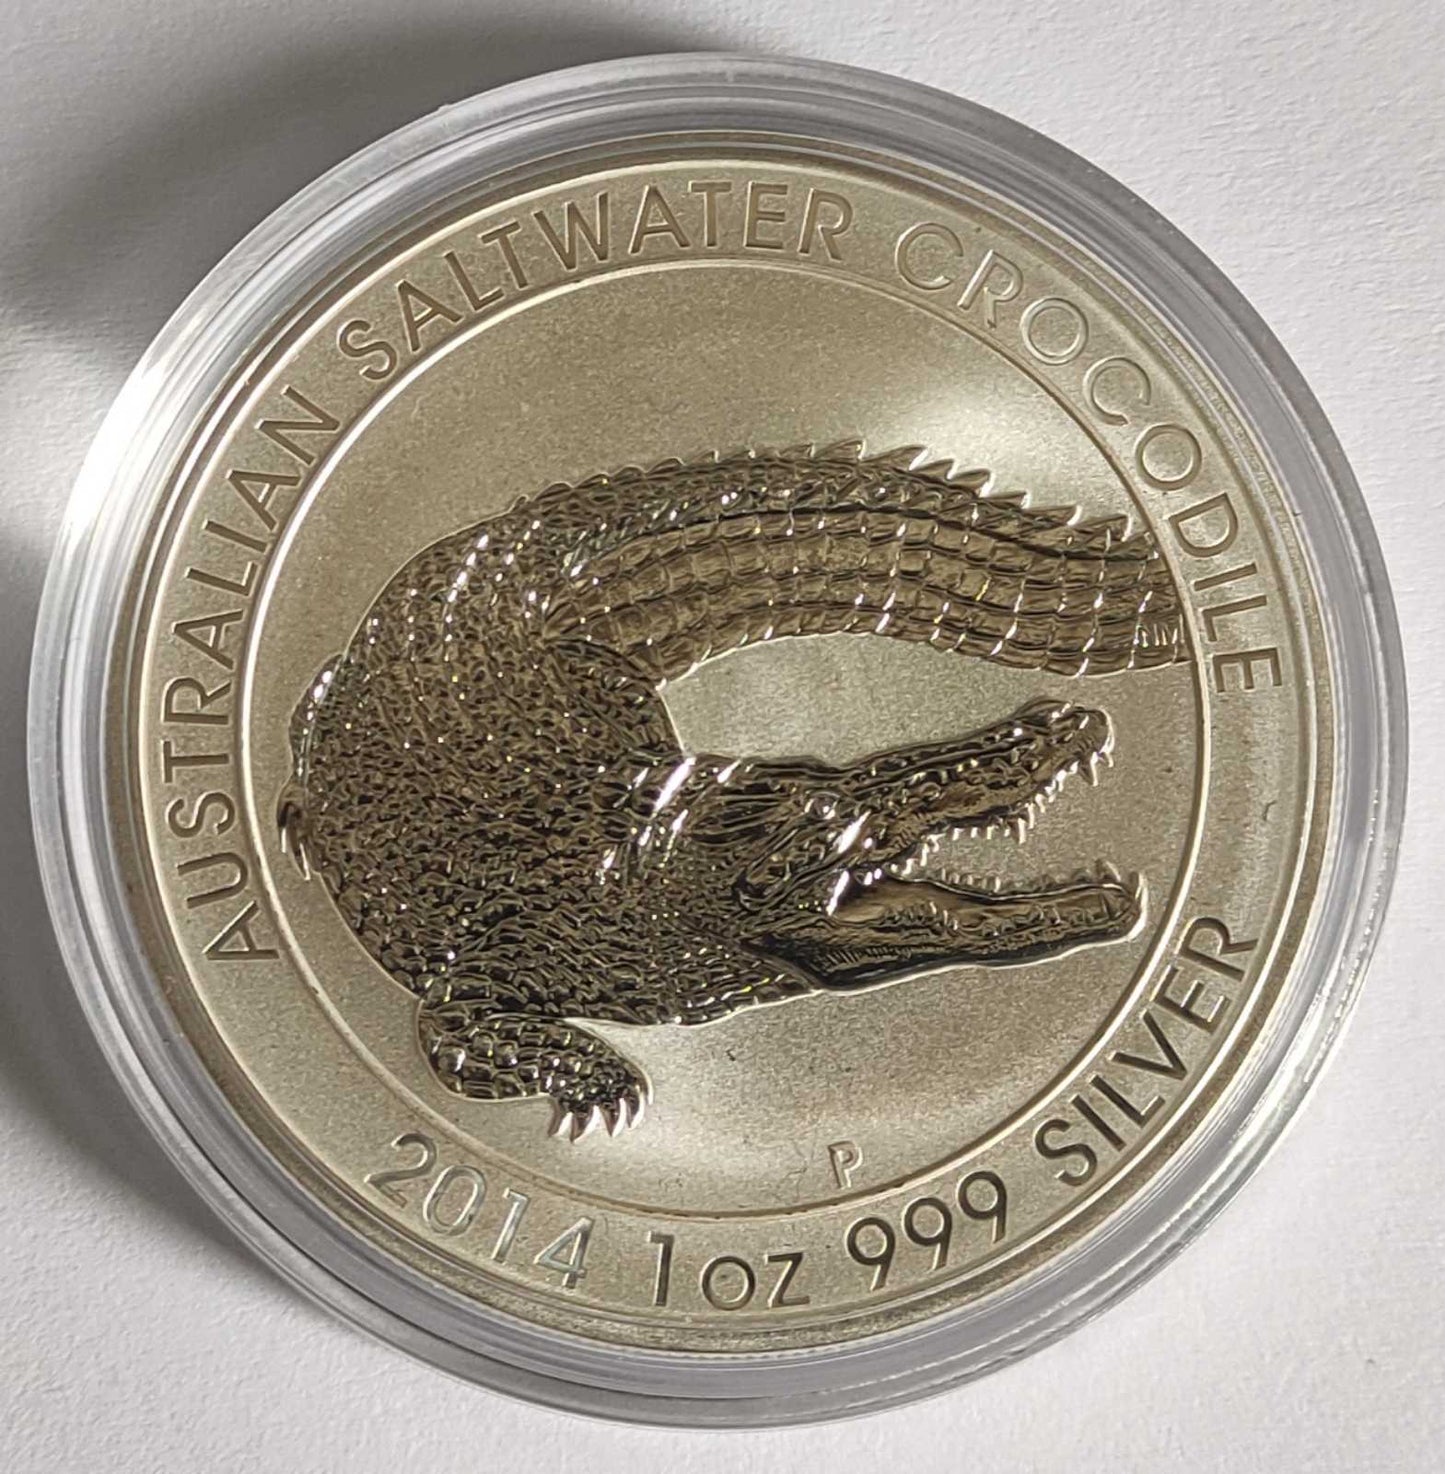 2014 Australia Saltwater Crocodile 1 oz Silver Coin BU in Capsule